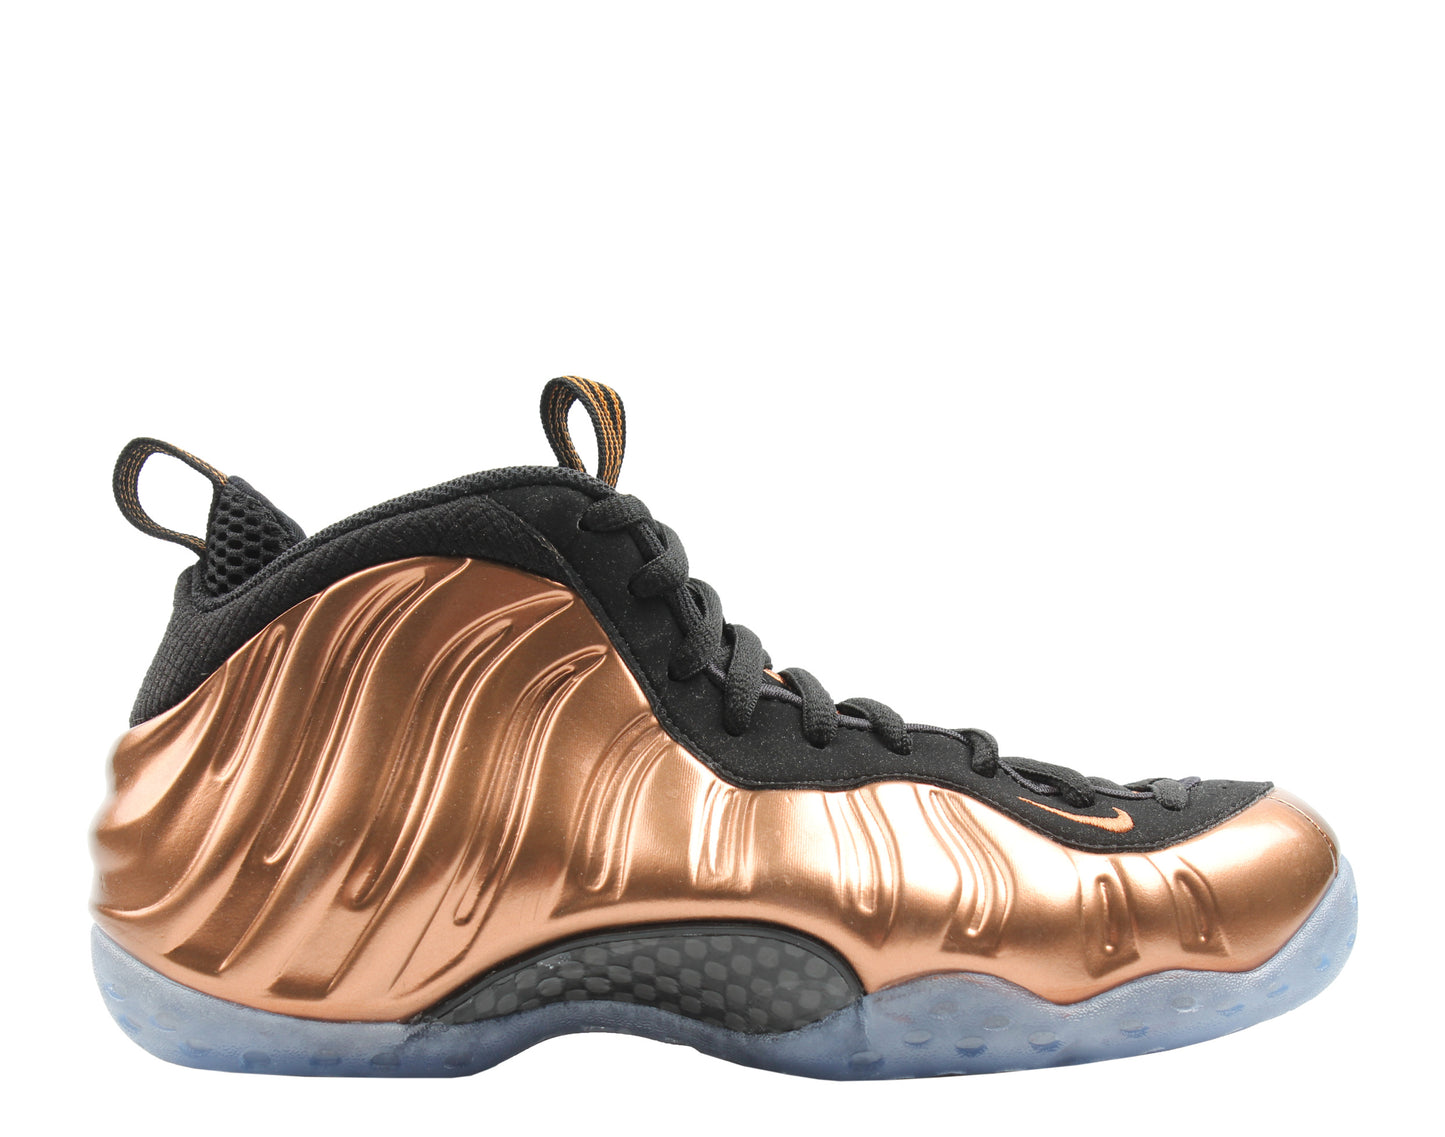 Nike Air Foamposite One Black/Metallic Copper Men's Basketball Shoes 314996-007